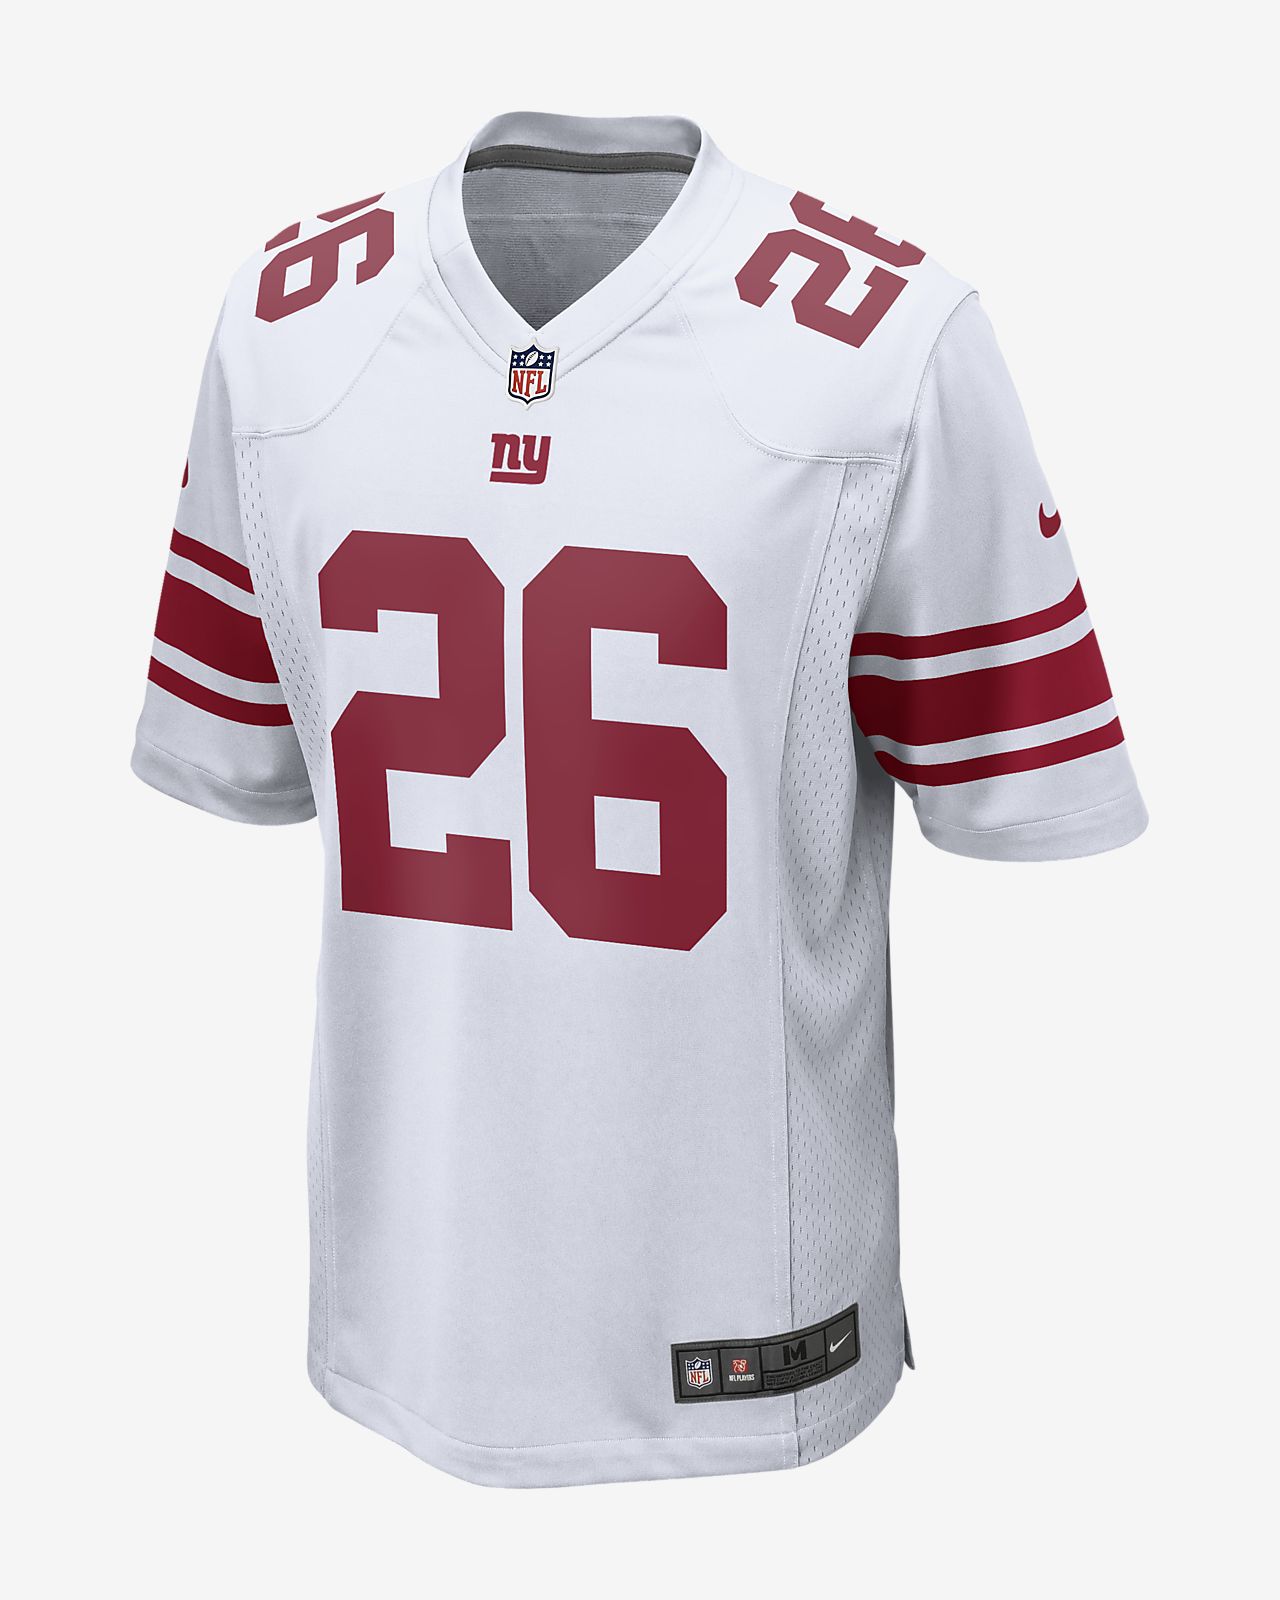 NFL New York Giants Game (Saquon Barkley) Men's Football Jersey. Nike.com